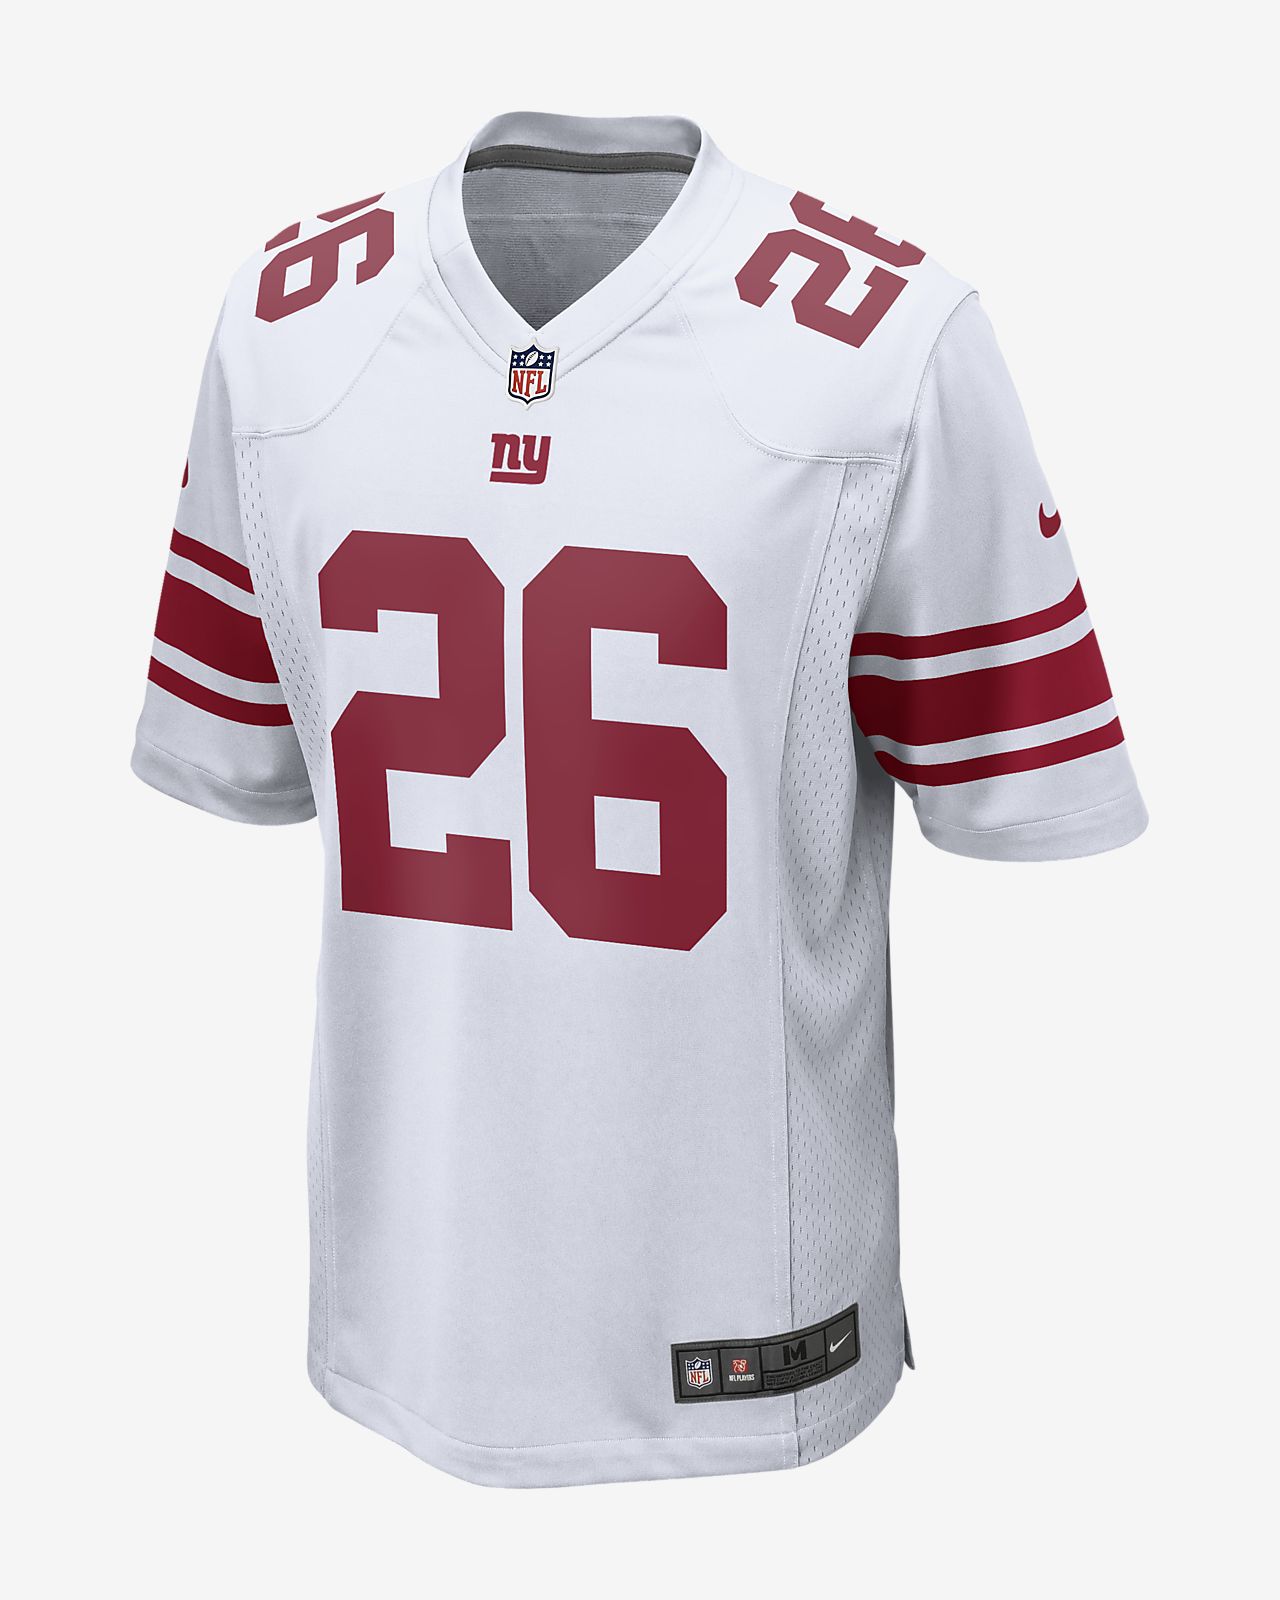 NFL New York Giants Game (Saquon Barkley) Men's Football Jersey. Nike.com